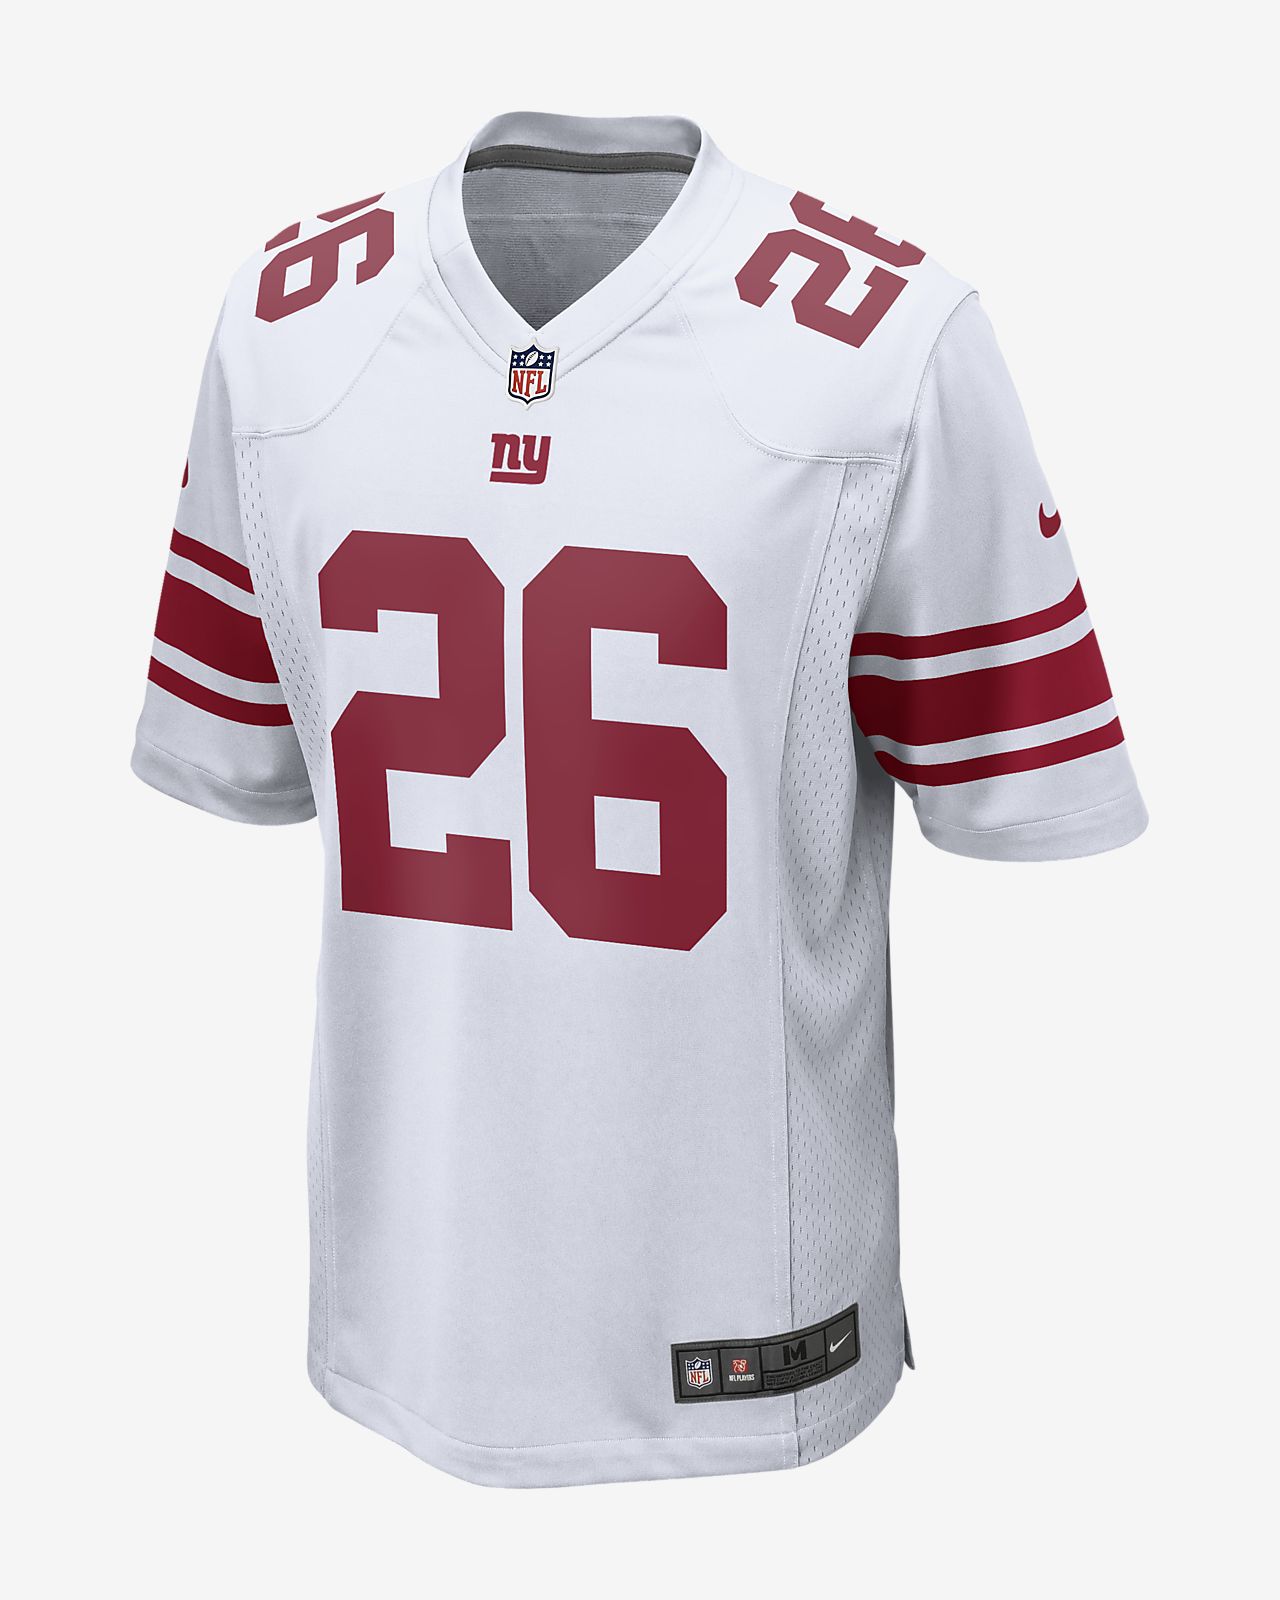 NFL New York Giants Game (Saquon Barkley) Men's Football Jersey. Nike.com